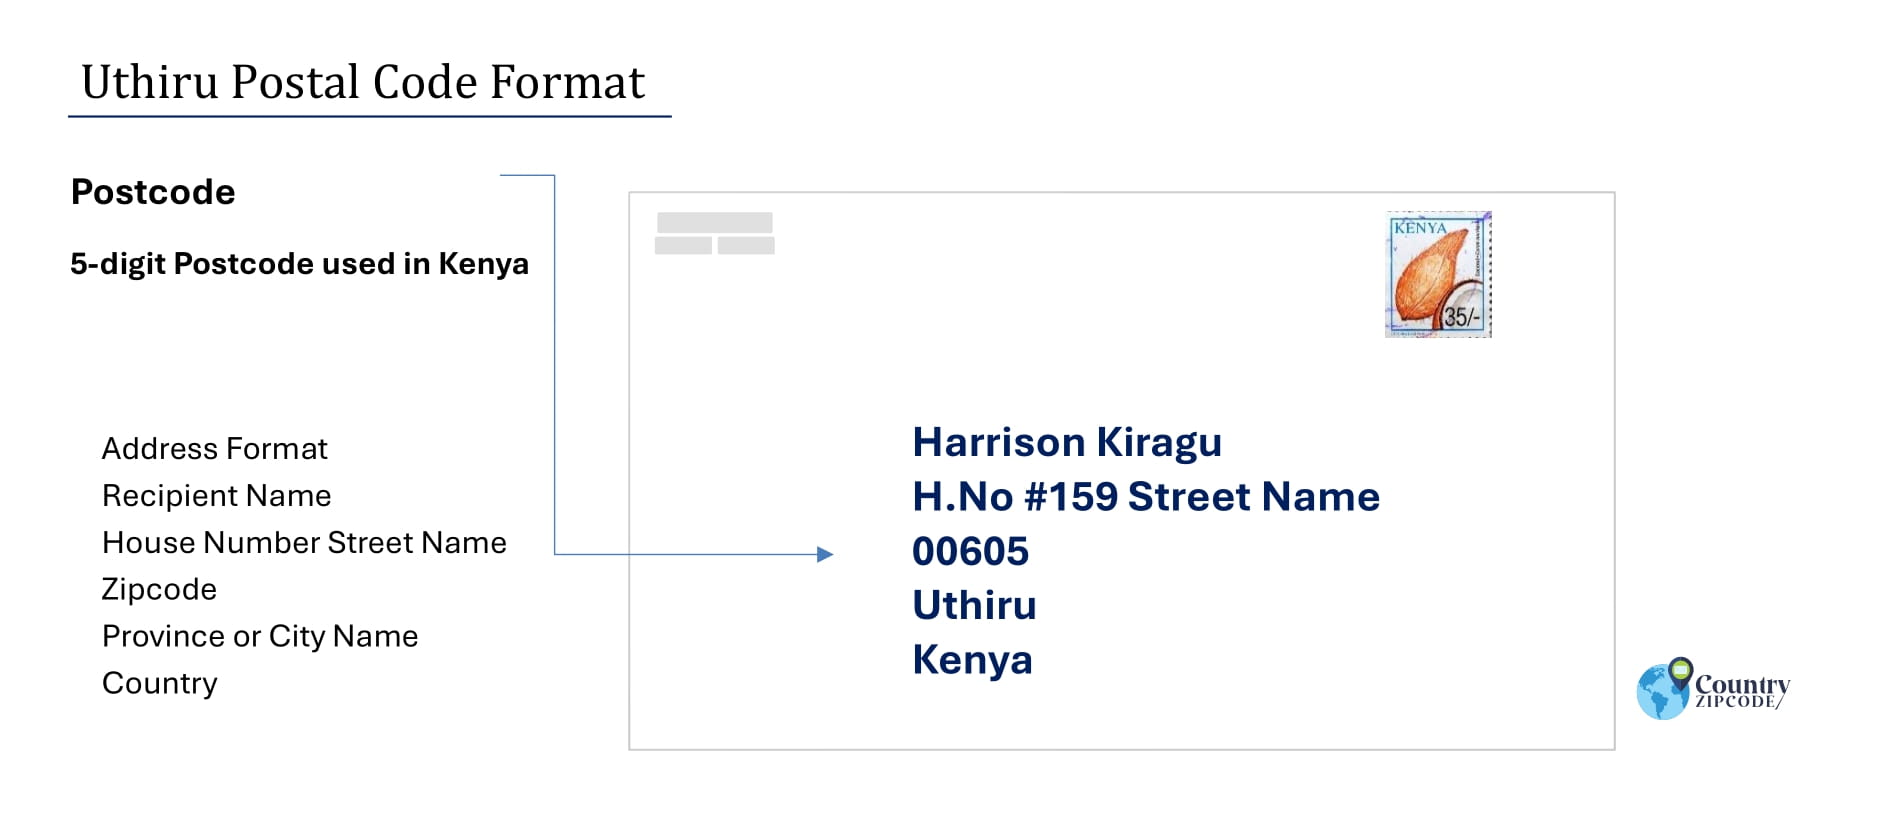 Example of Uthiru Address and postal code format